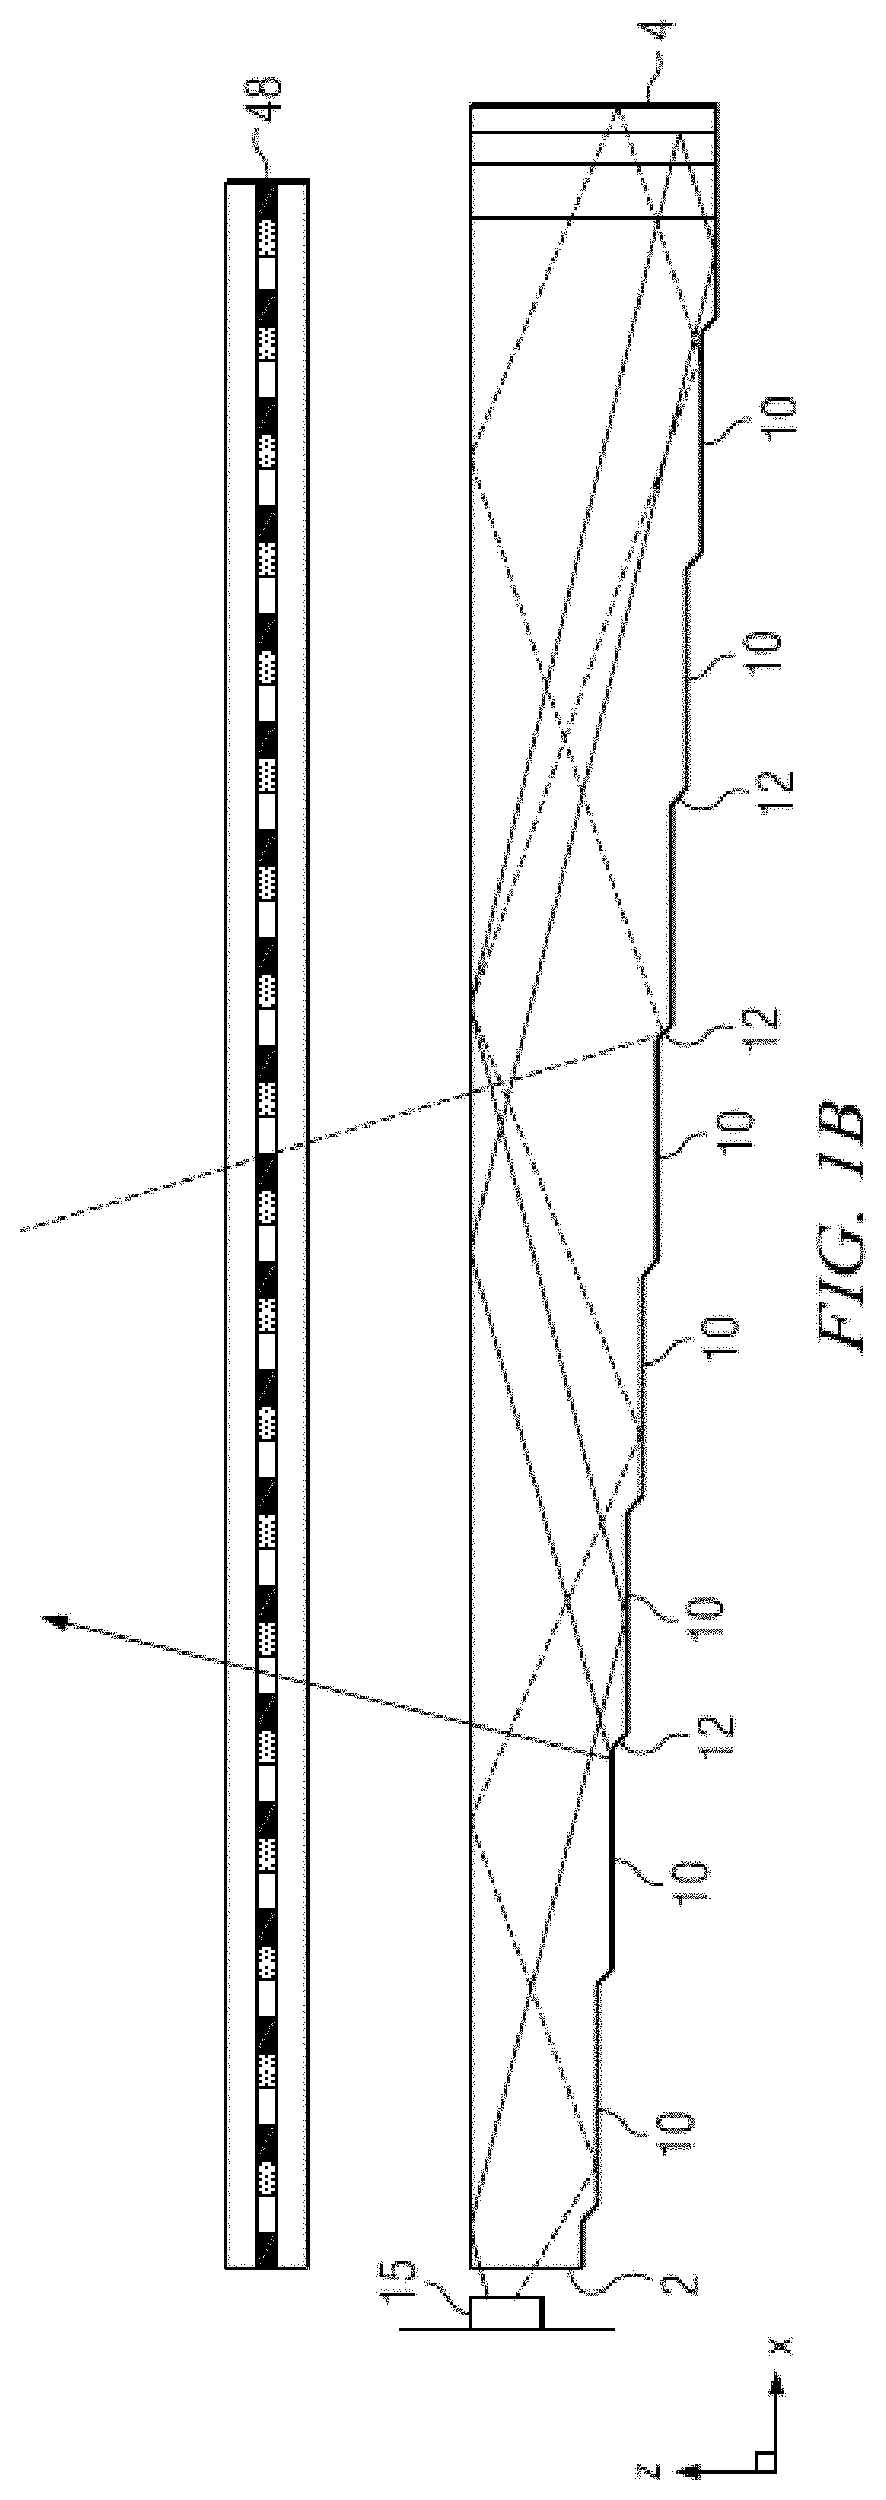 Optical stack for imaging directional backlights